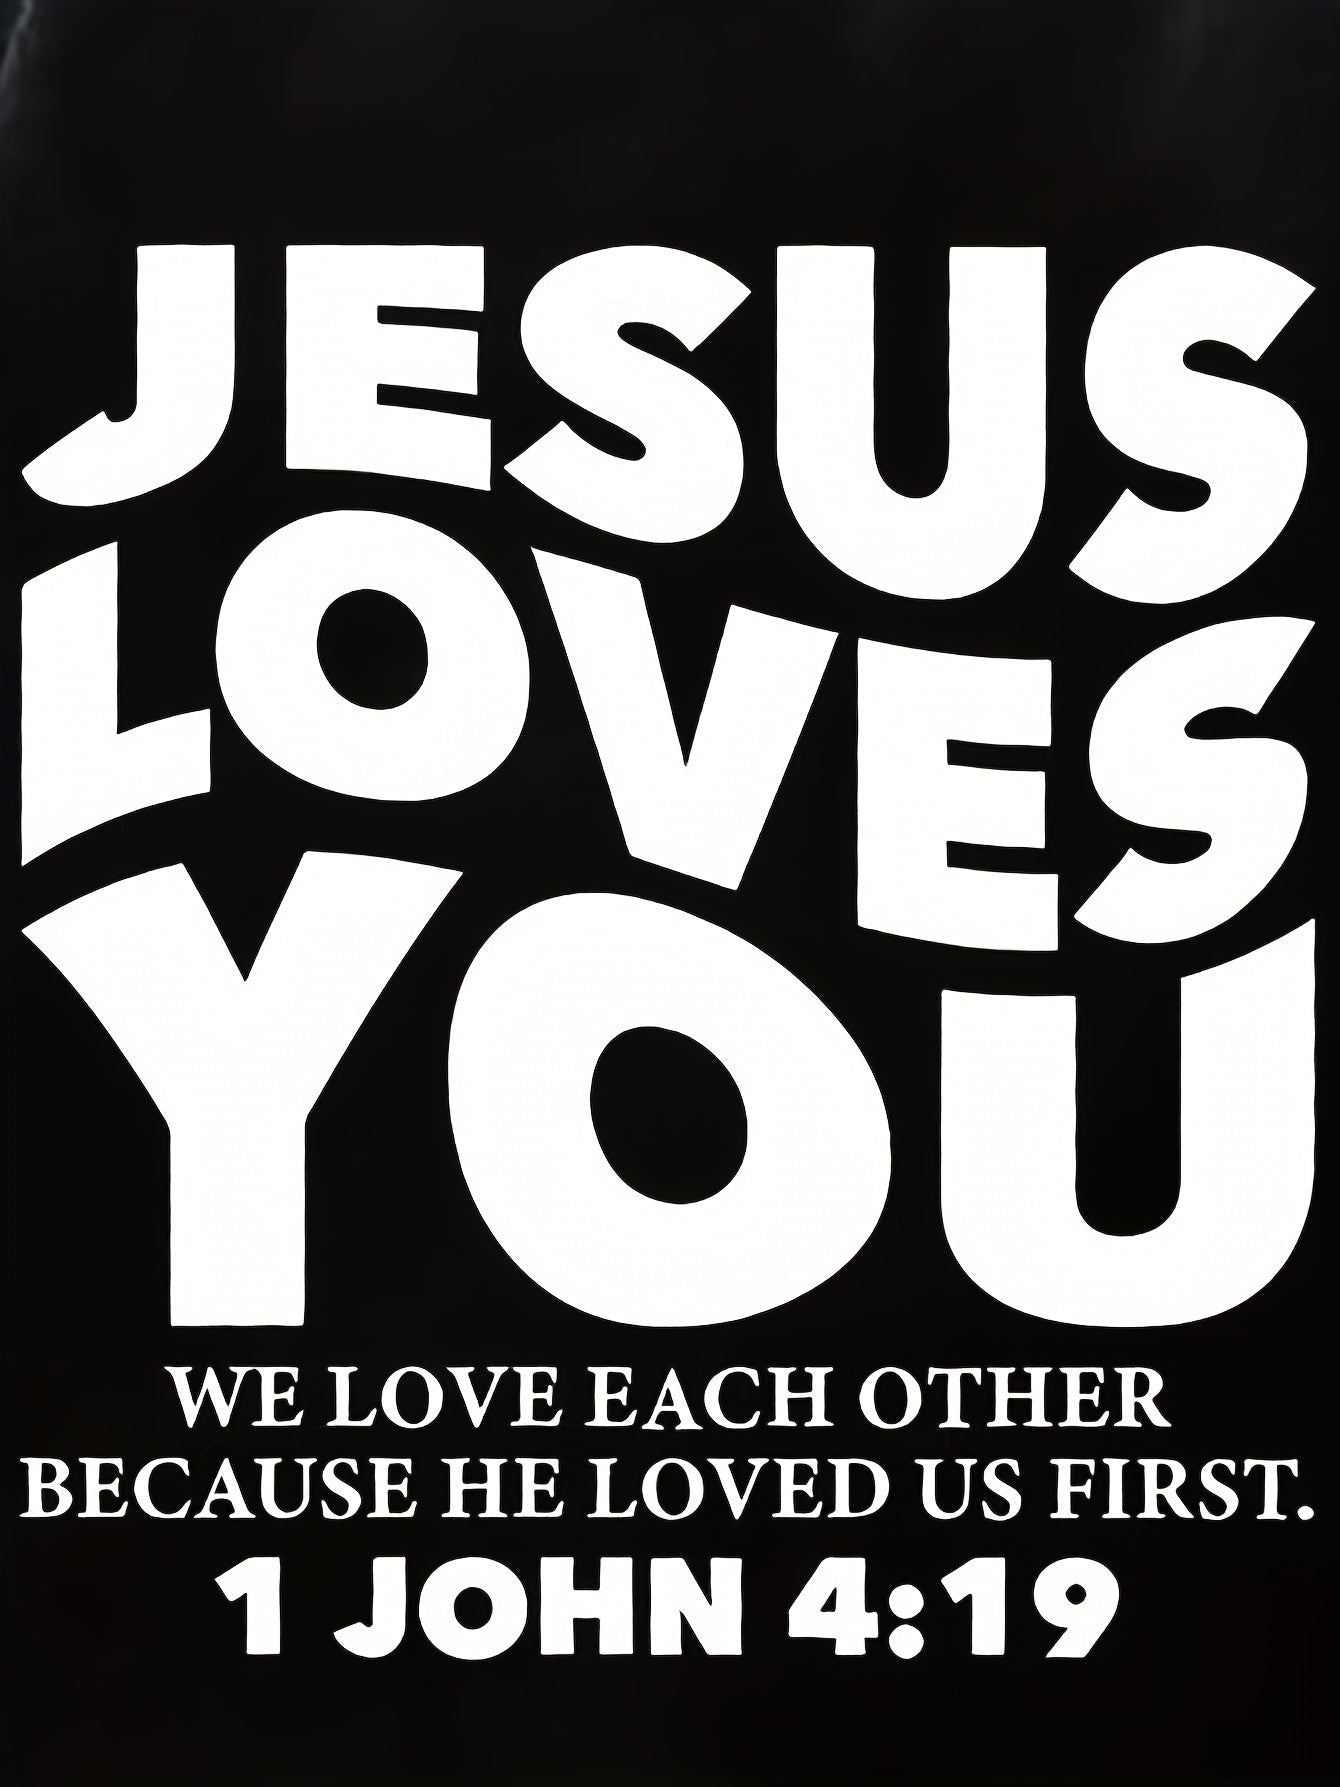 1 John 4:19 Jesus Loves You Plus Size Women's Christian Pullover Hooded Sweatshirt claimedbygoddesigns